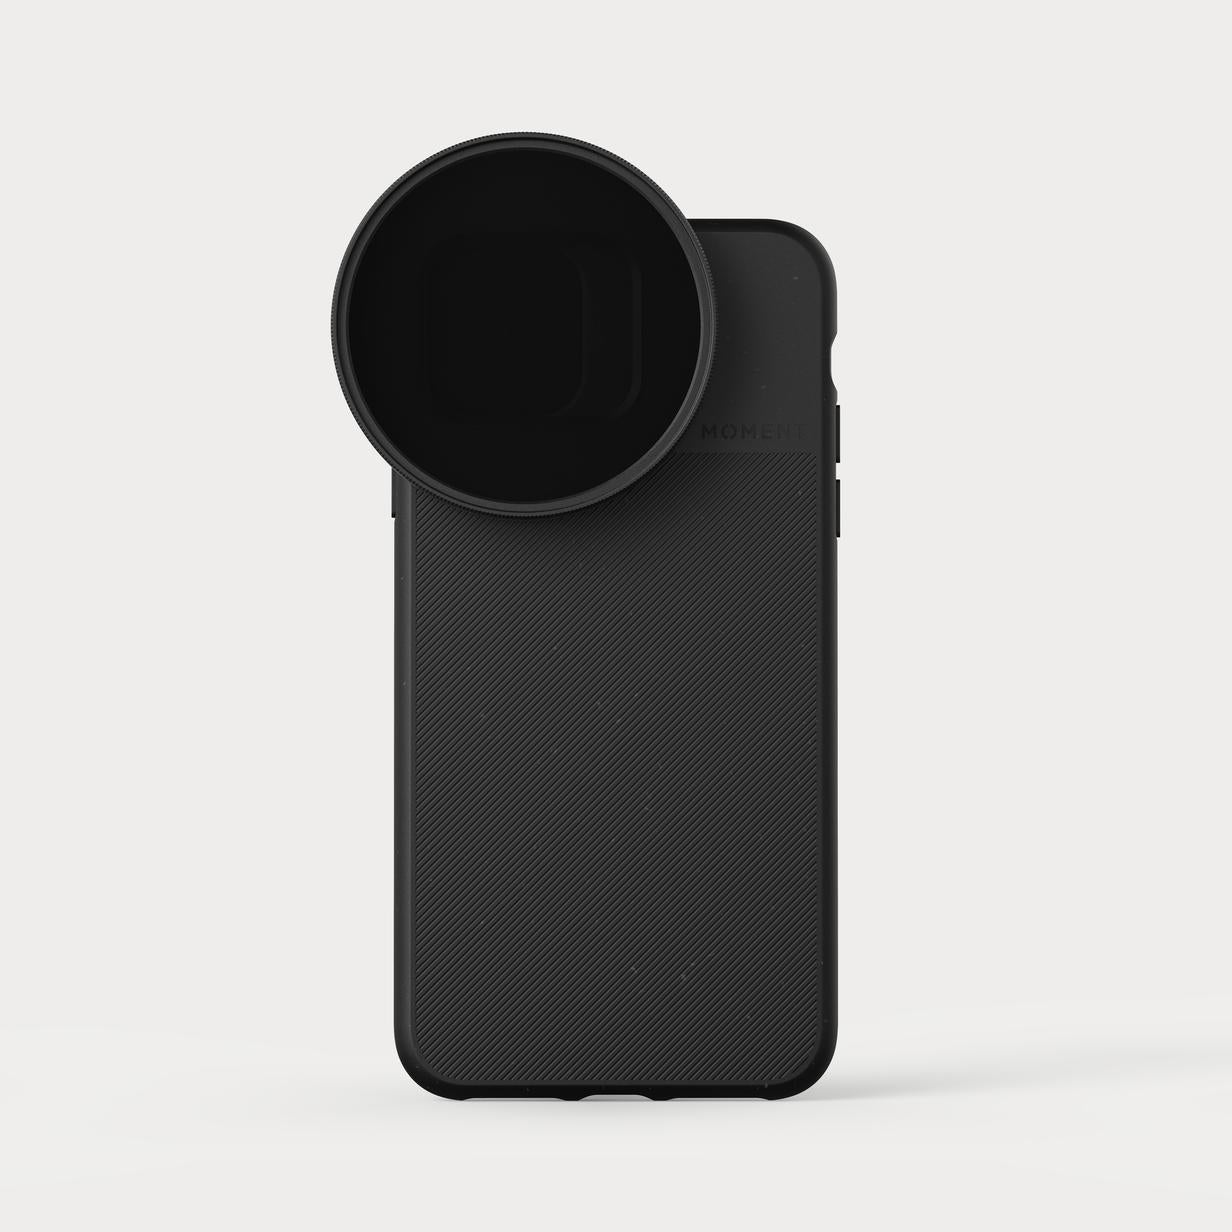 Moment 67mm Phone Filter Mount For M-Series Lenses